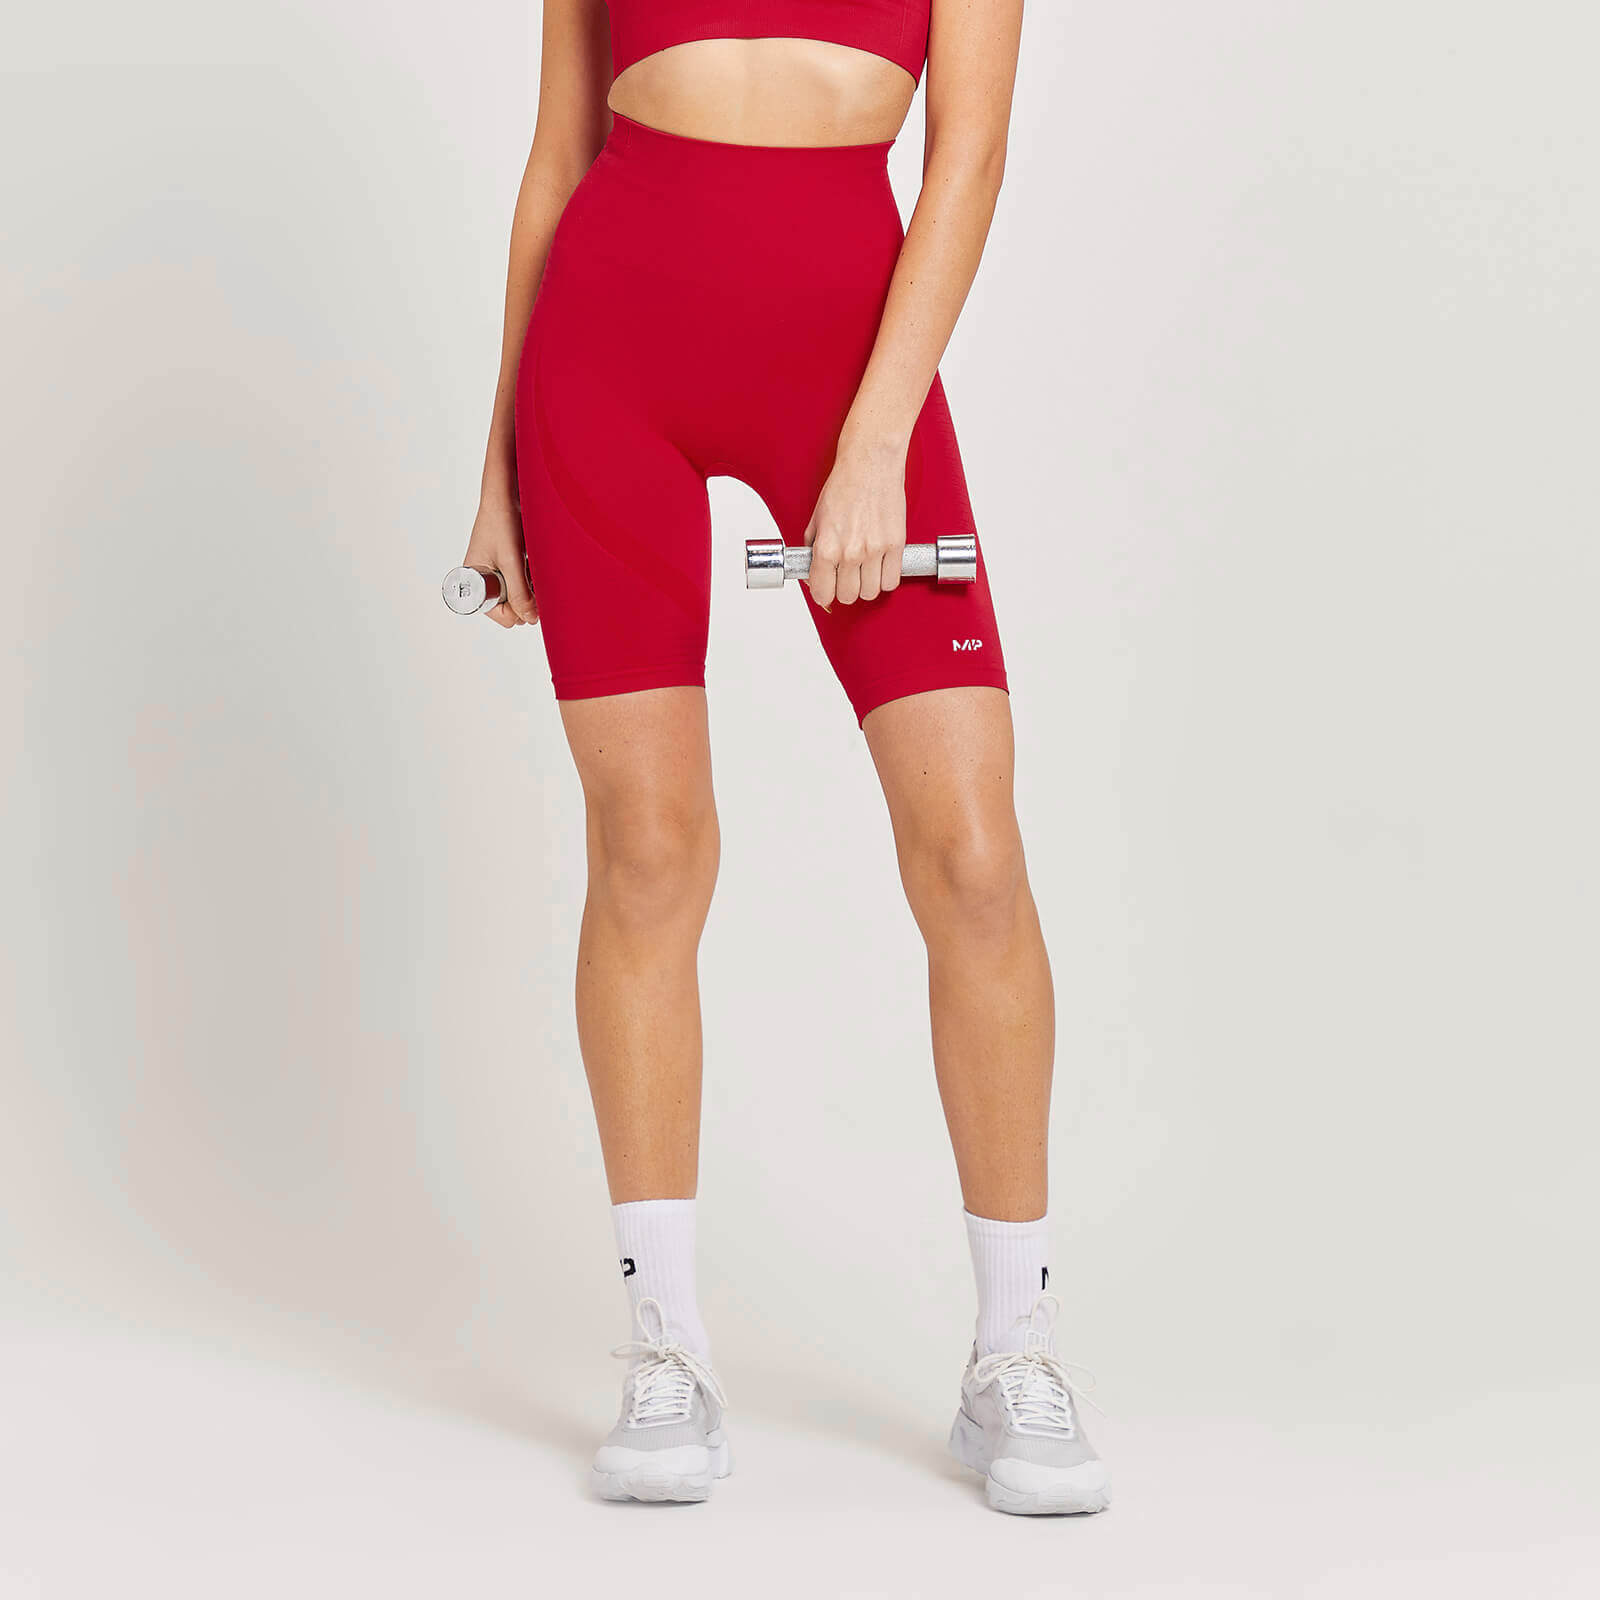 MP Women's Tempo Seamless Cycling Shorts - Danger - XXS, Myprotein International  - купить со скидкой